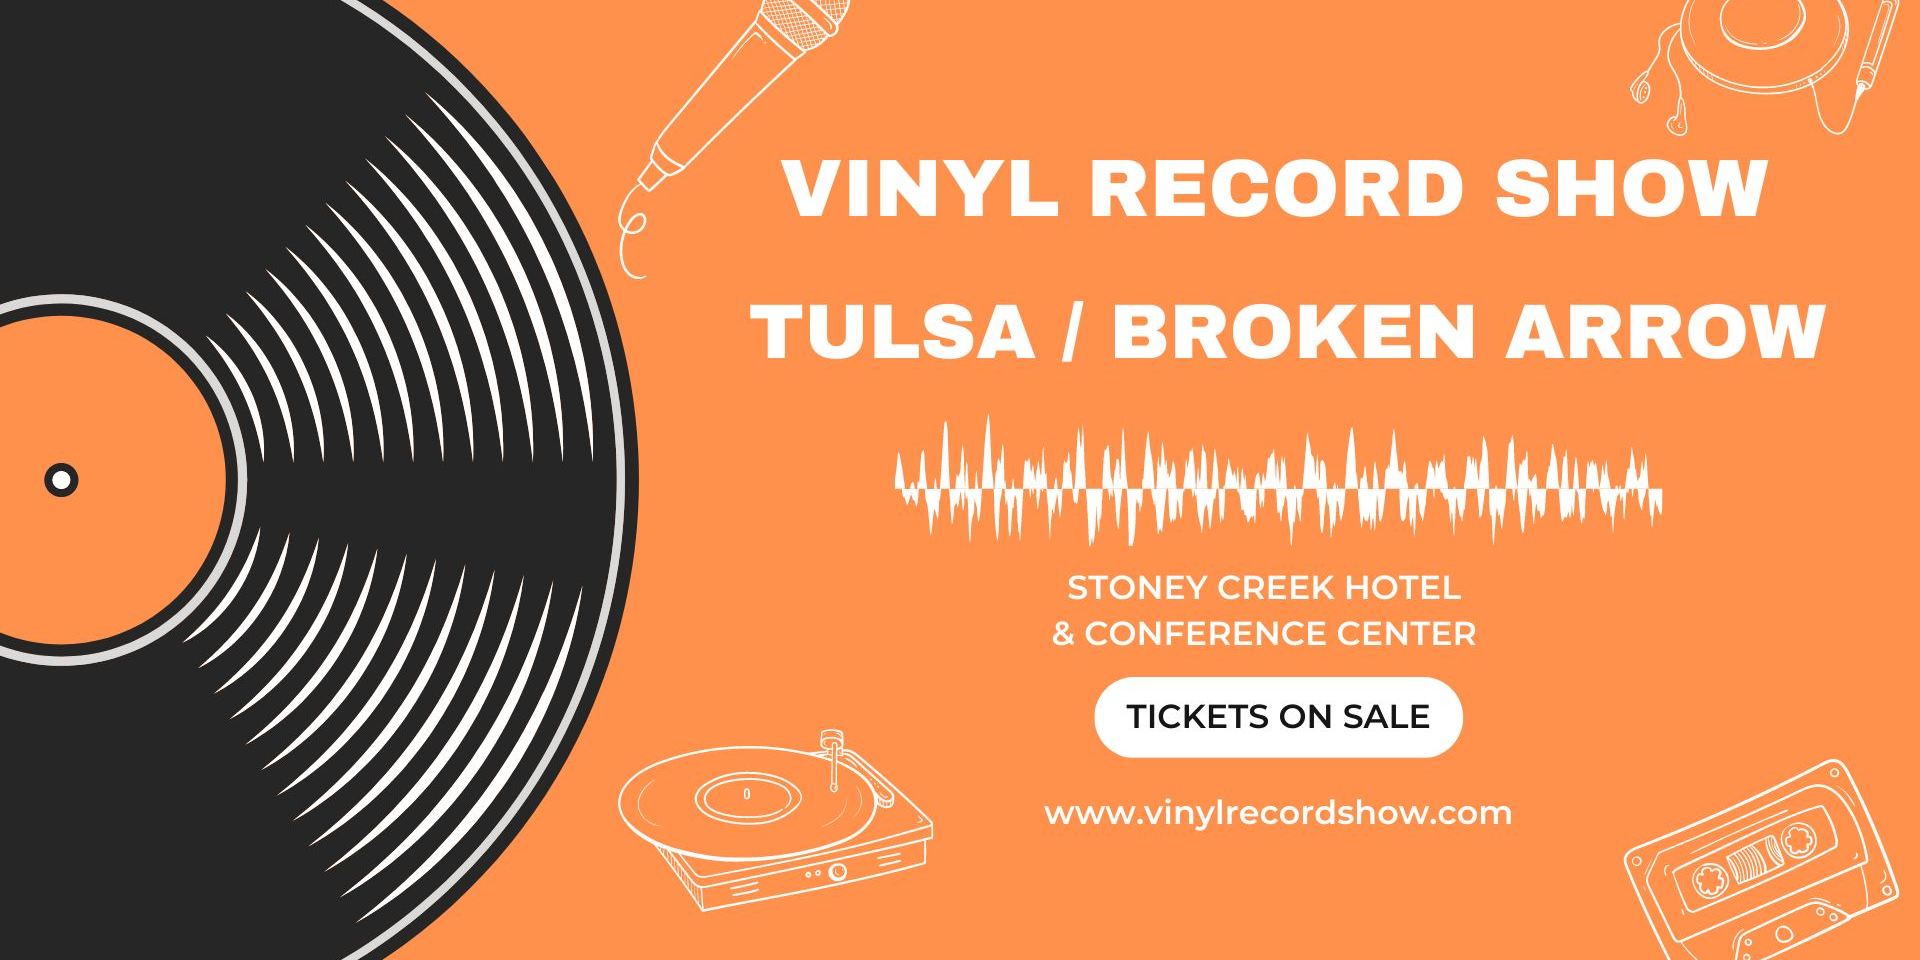 Vinyl Record Show of Tulsa, OK / Broken Arrow, OK promotional image